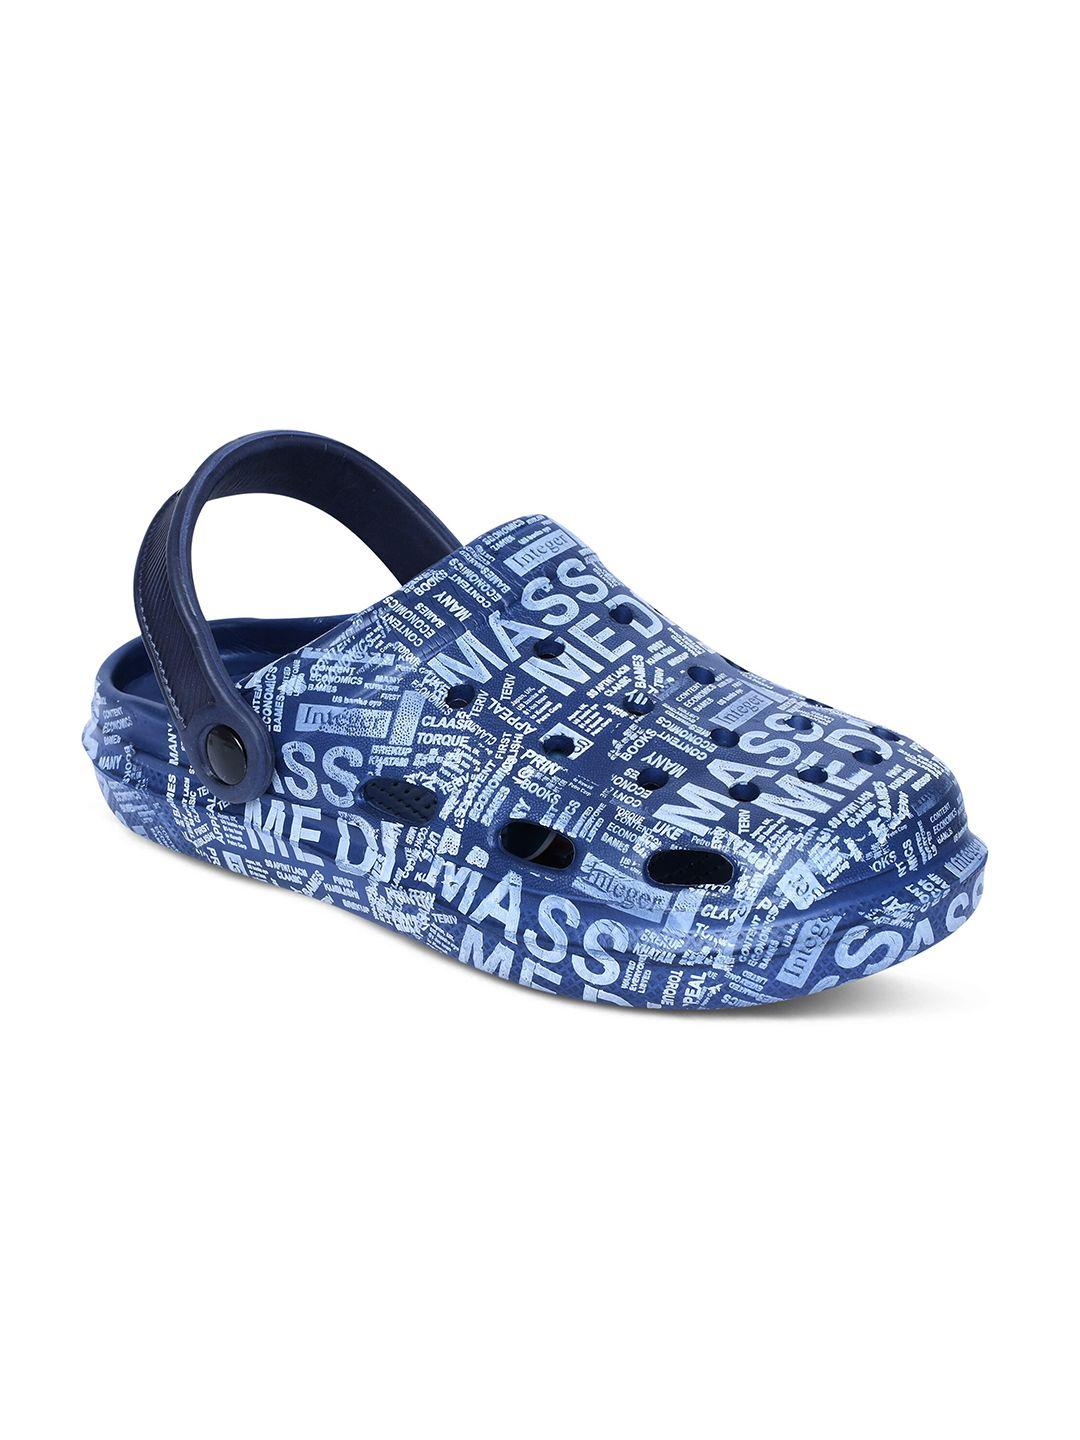 Airspot Unisex Navy Blue Clogs Sandals